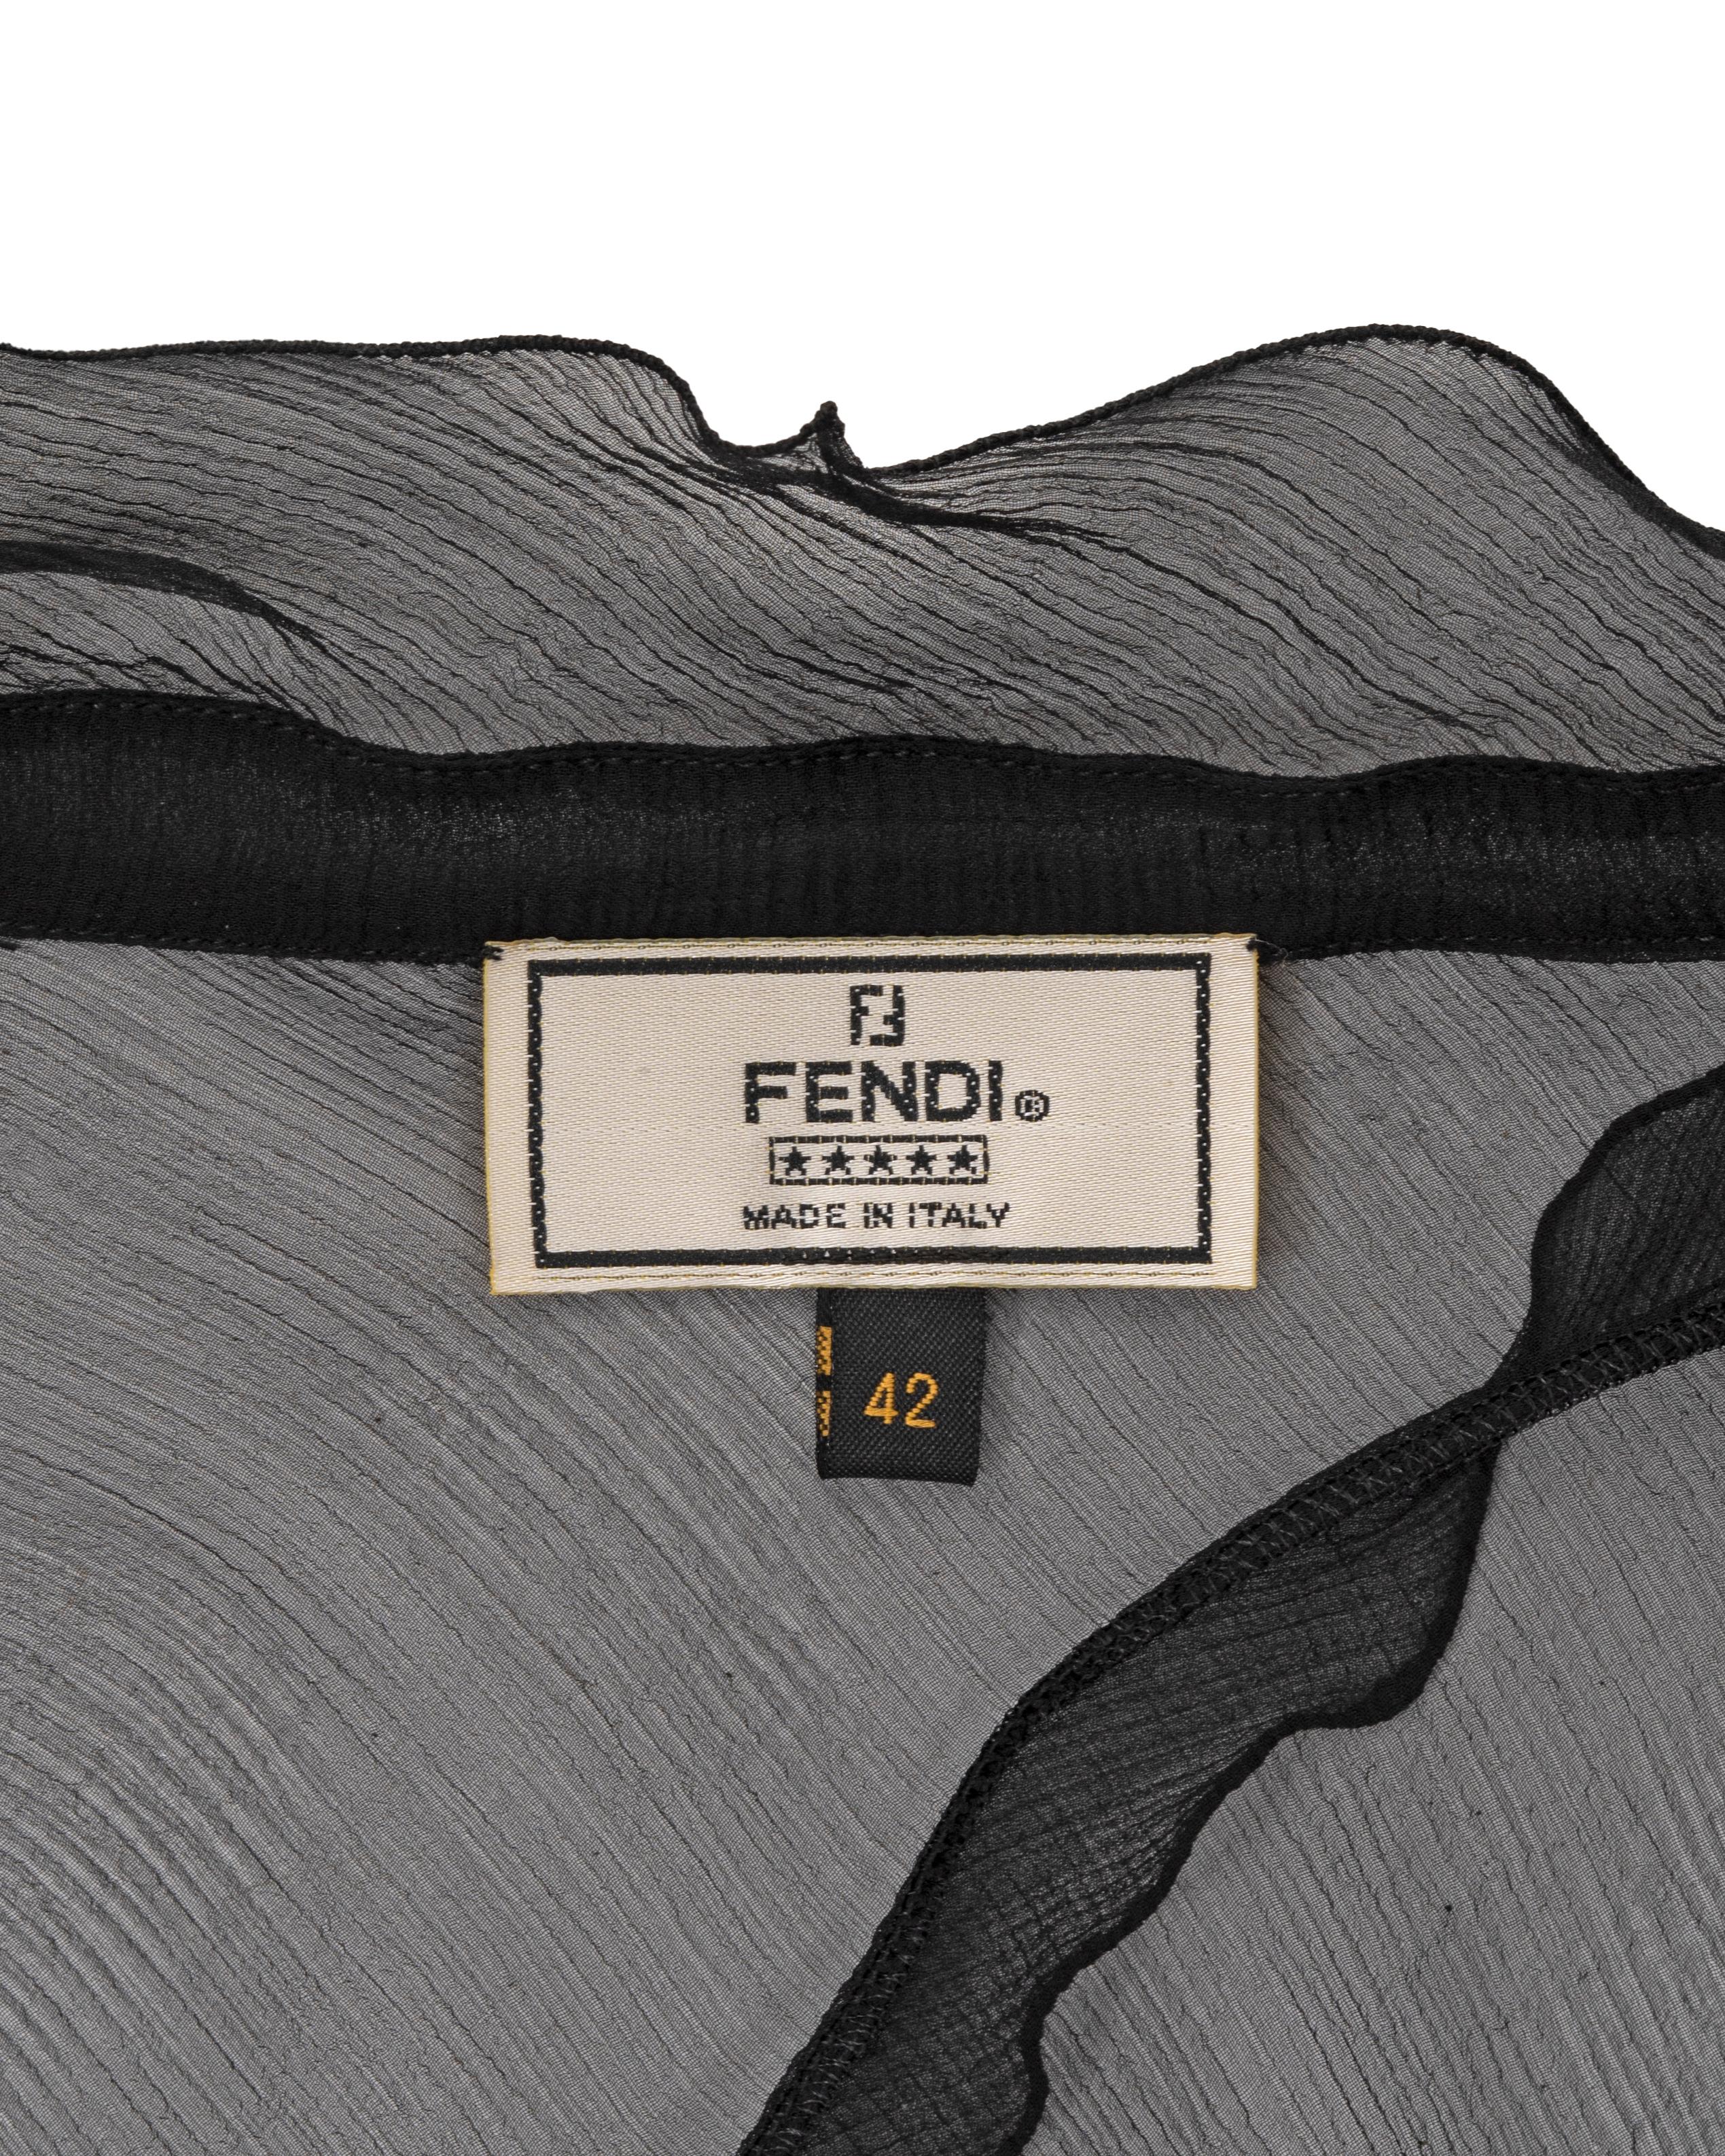 Fendi by Karl Lagerfeld black silk chiffon blouse, ss 2000 6